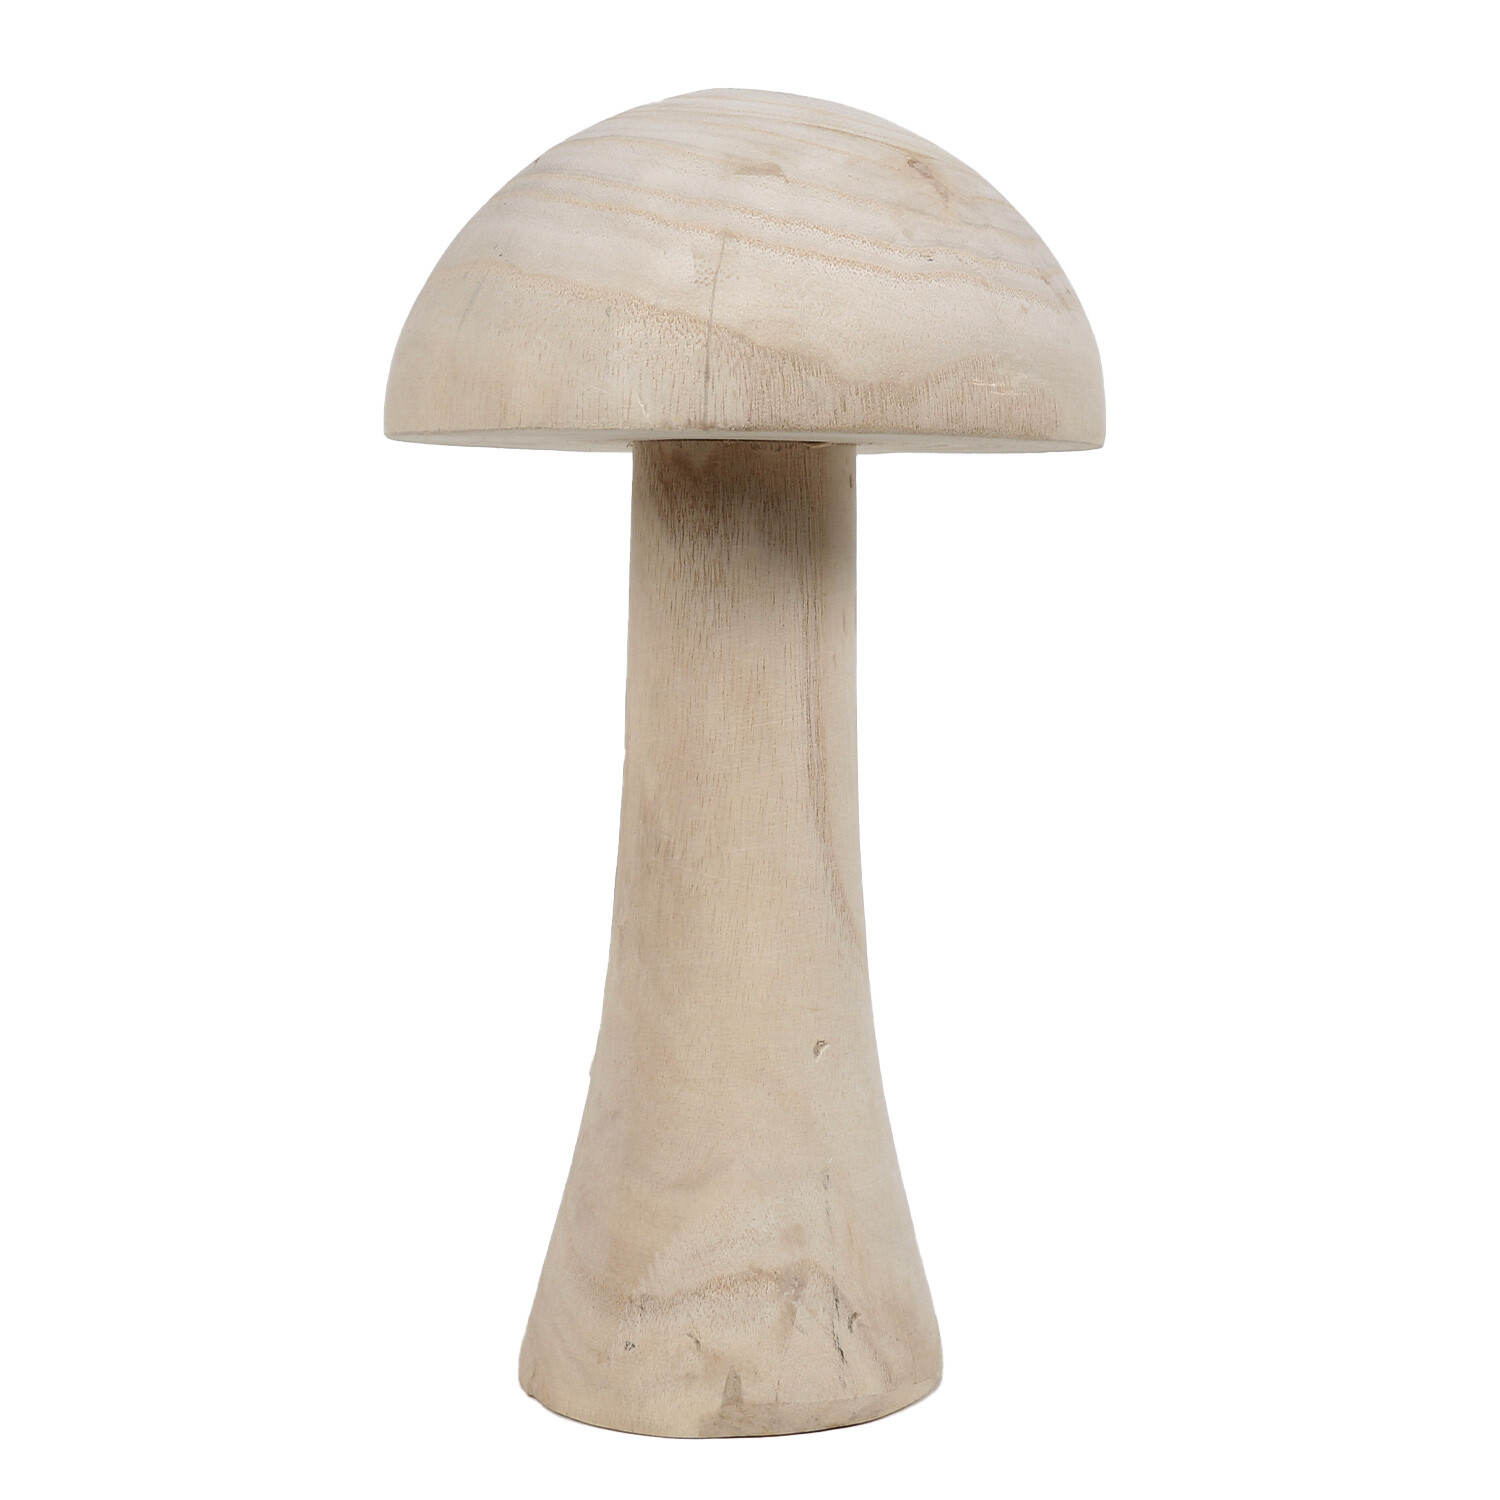 Wooden Mushroom Ornament - Natural Image 1